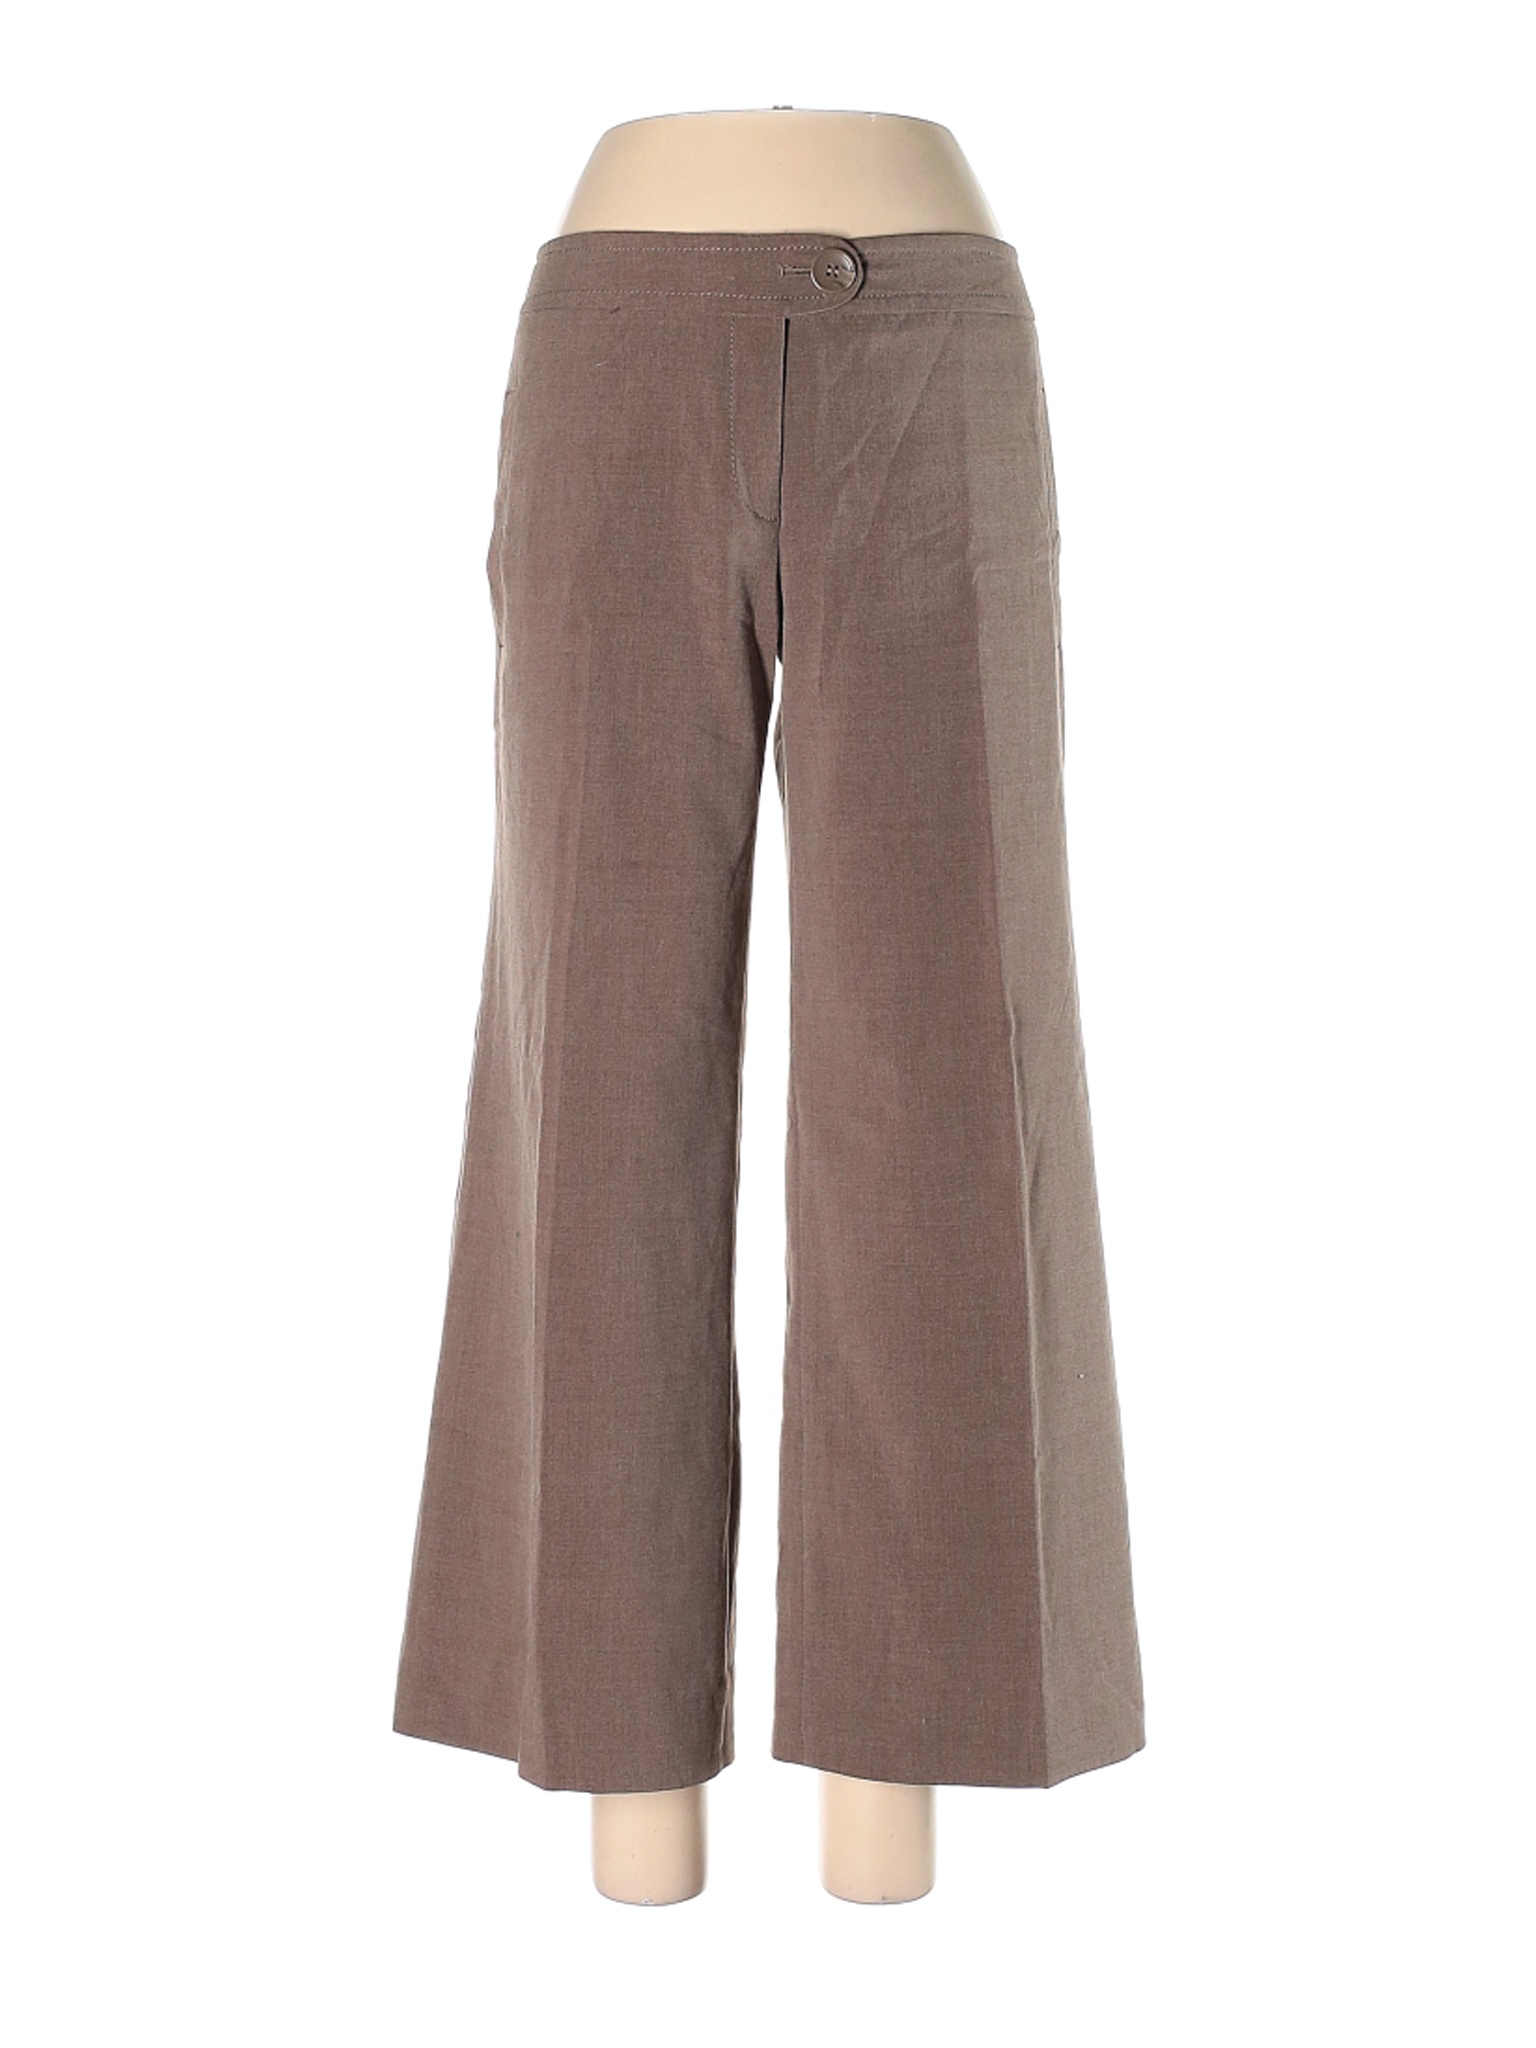 The Limited Women Brown Dress Pants 6 | eBay